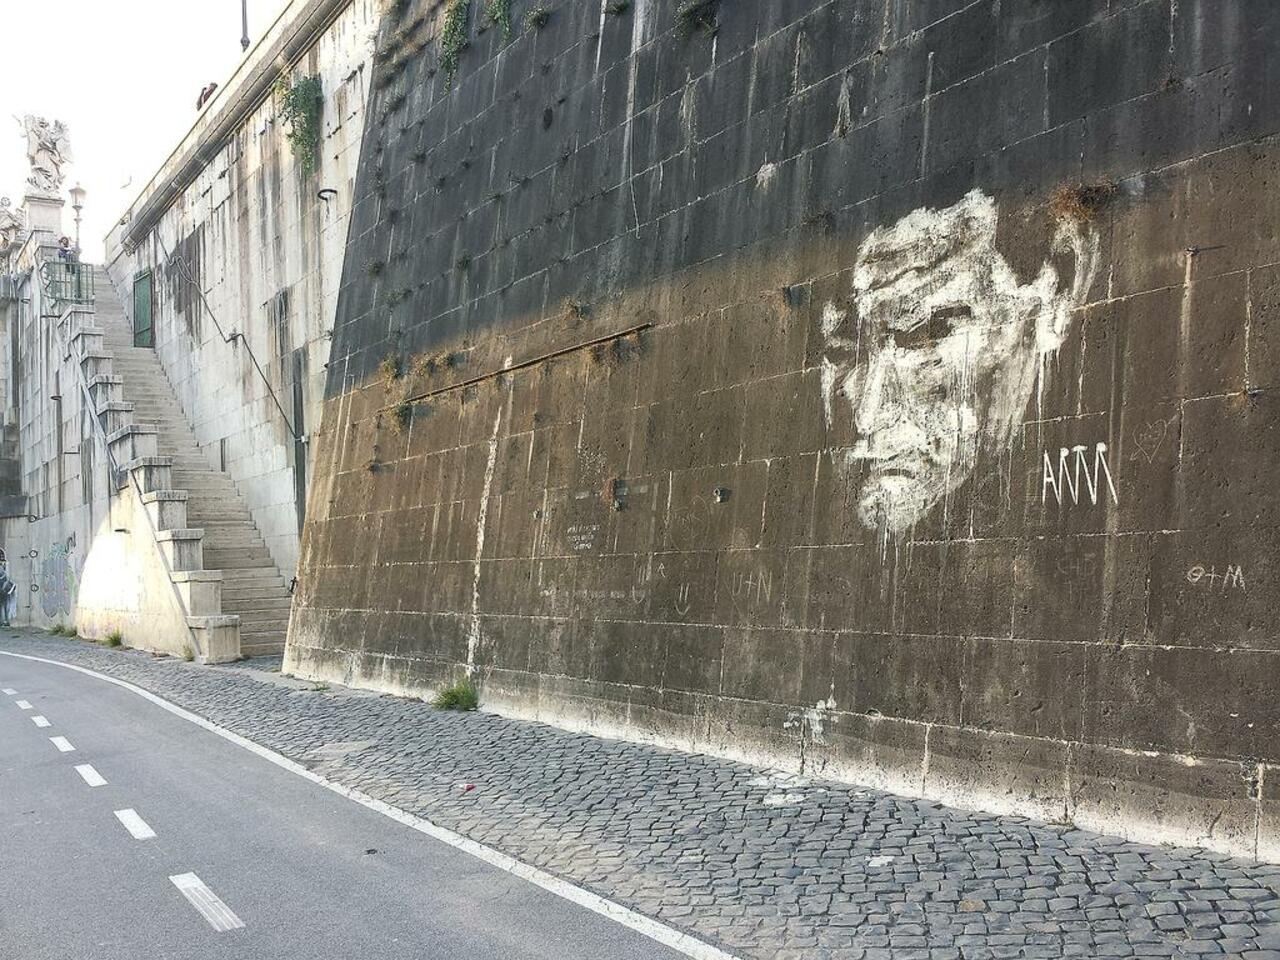 Street Art by anonymous in #Roma http://www.urbacolors.com #art #mural #graffiti #streetart http://t.co/RyoAnKYPtE